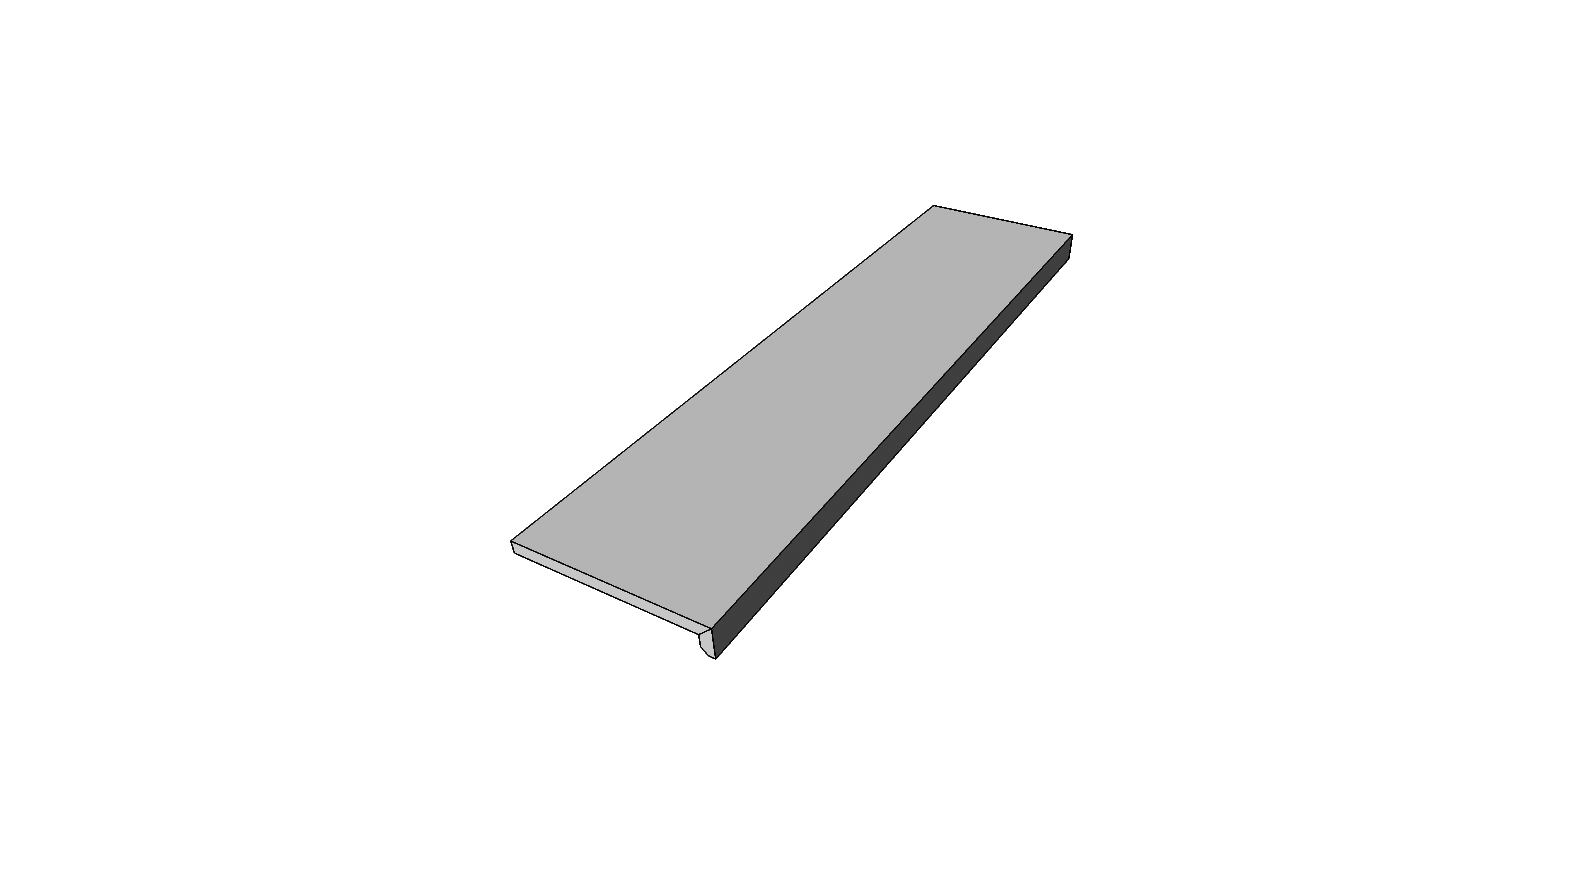 Bord en L descendant collé bord rectiligne <span style="white-space:nowrap;">26X80 cm</span>   <span style="white-space:nowrap;">ép. 20mm</span>